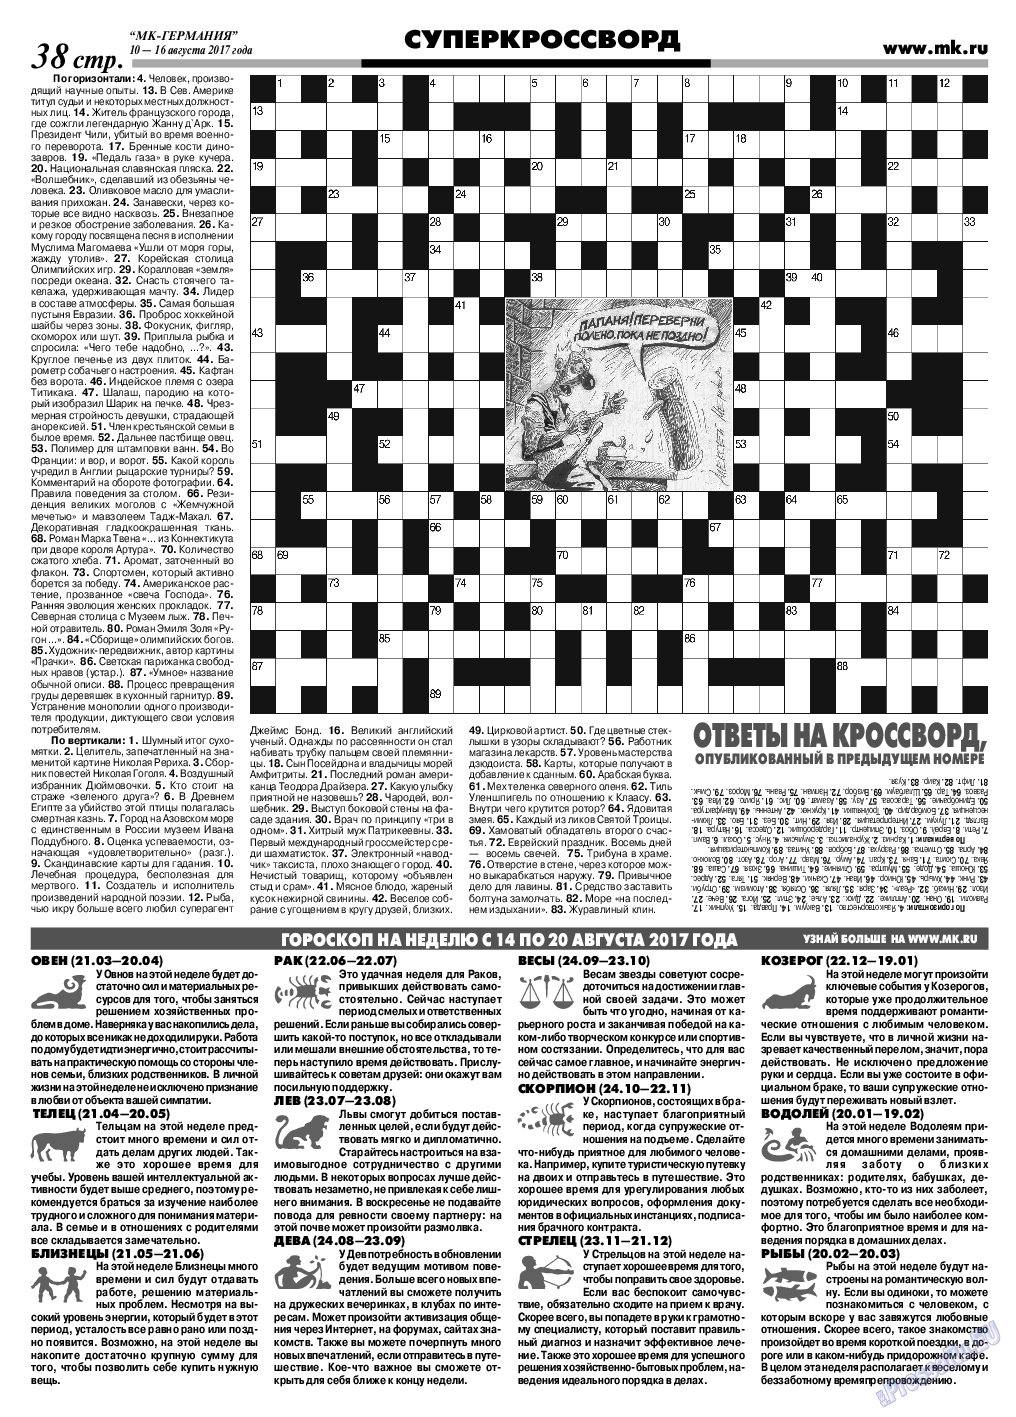 МК-Германия, газета. 2017 №33 стр.38